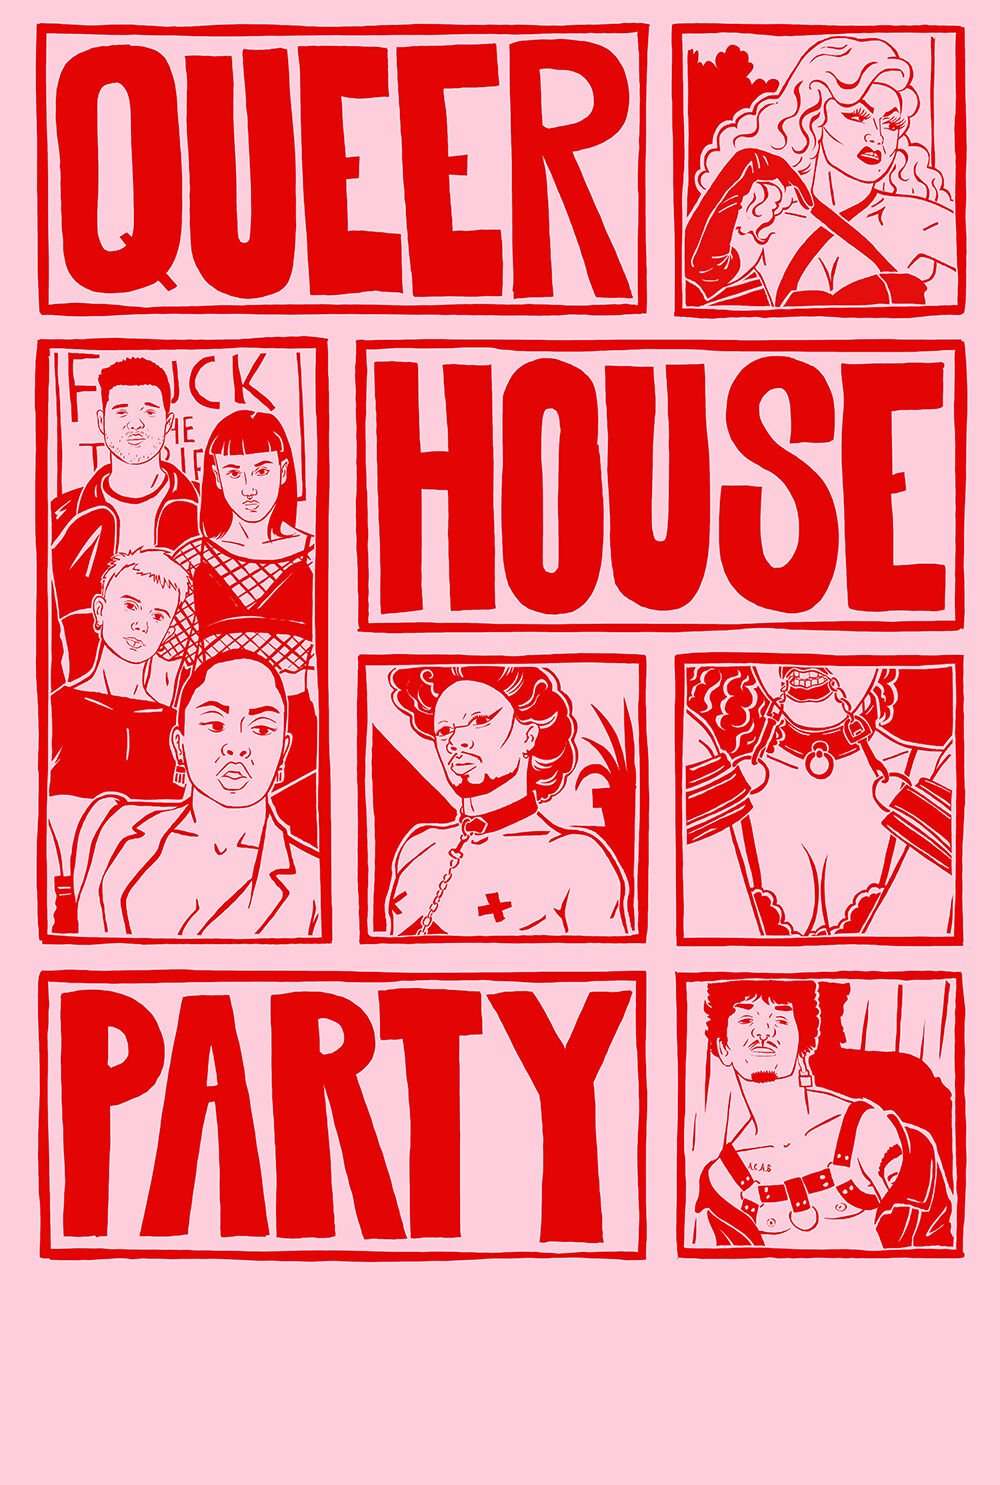 Logotype for Queershouseparty club in London, designed by Fredde Lanka